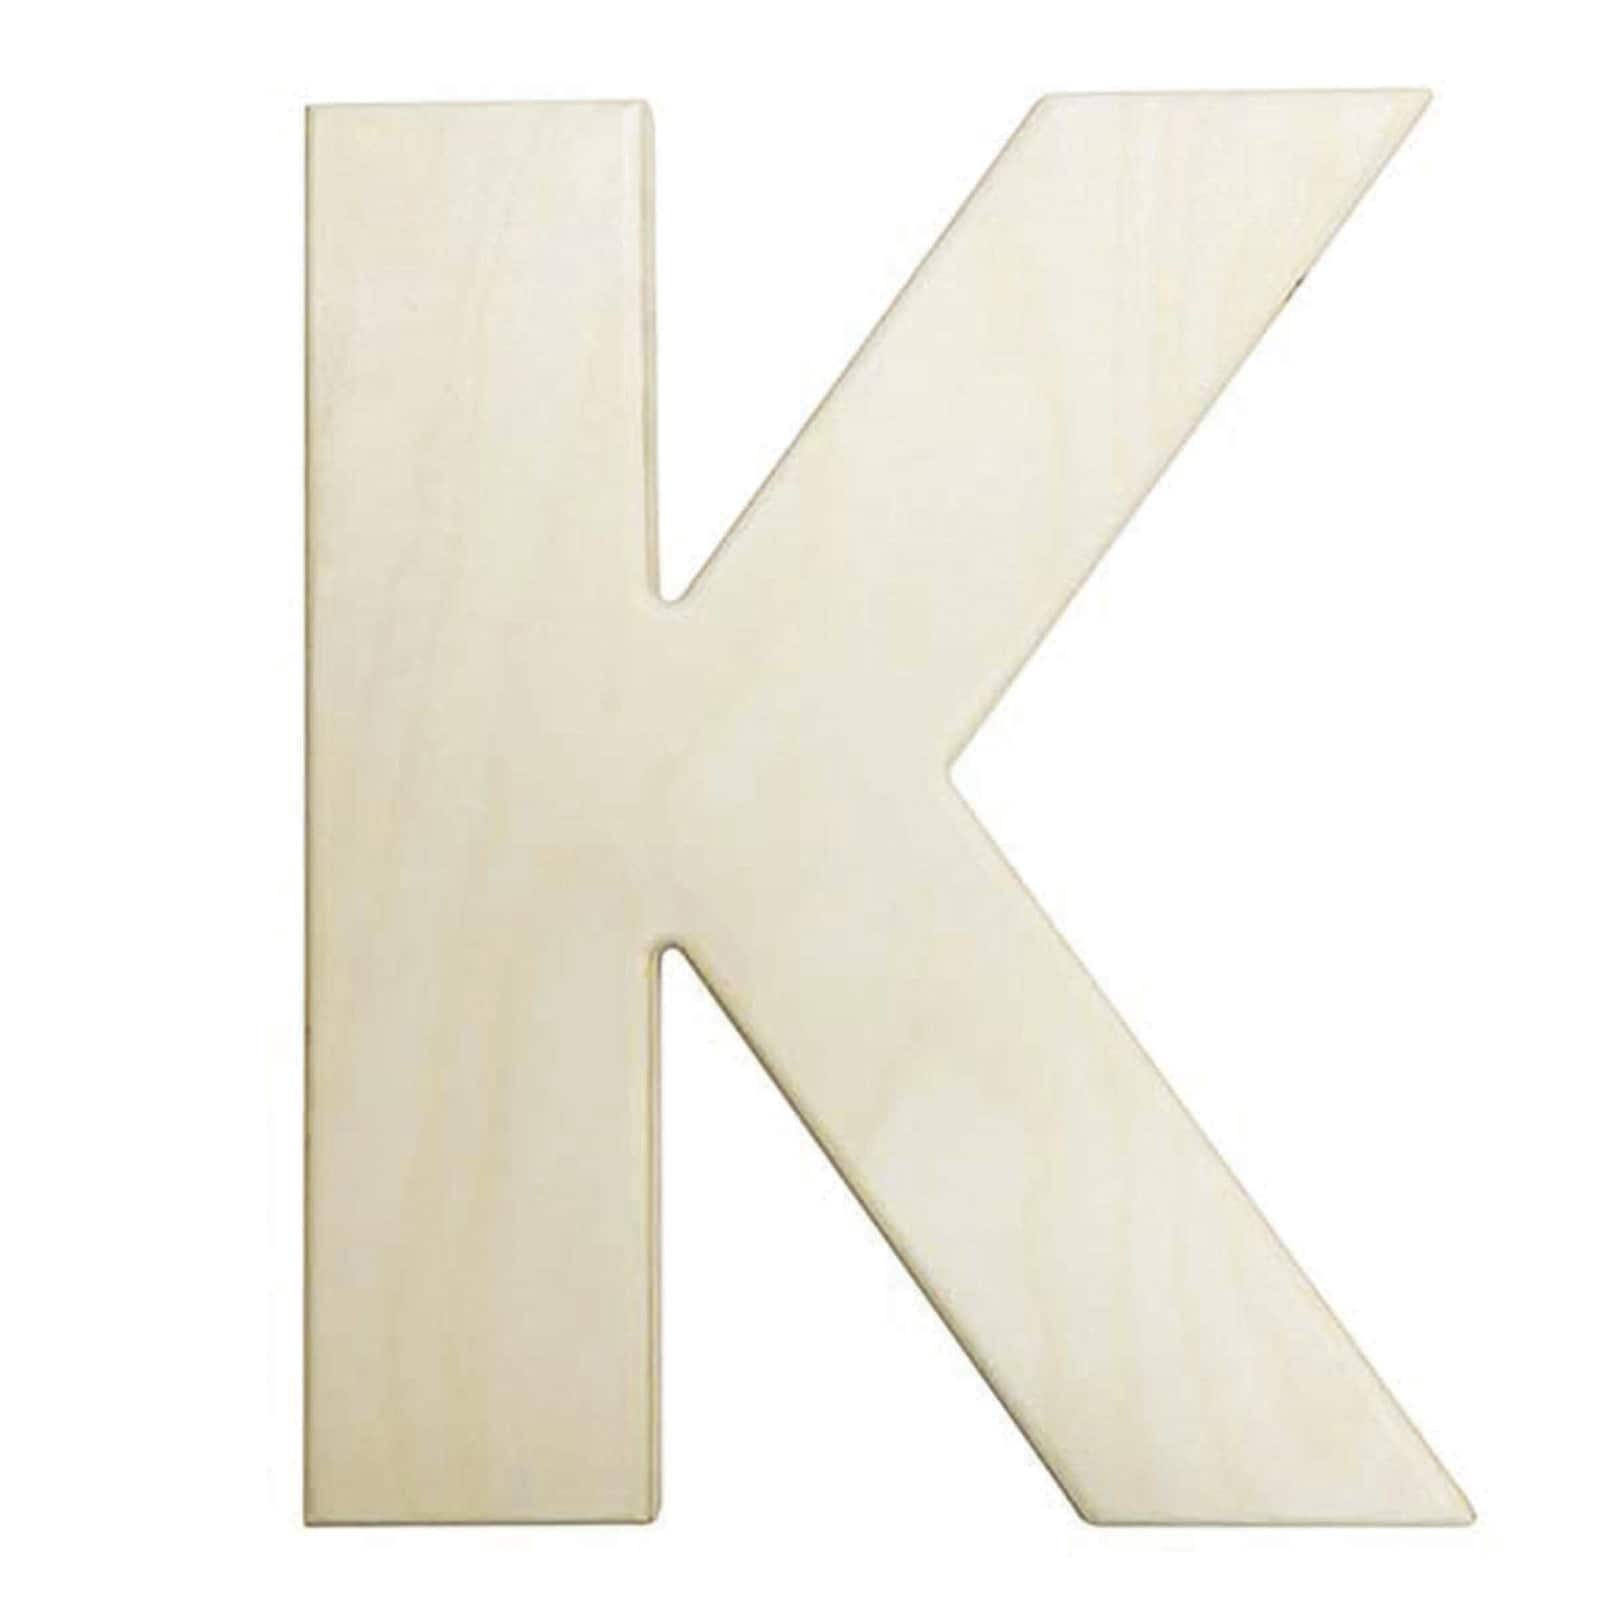 Large Wooden Letters: 12 inch Unfinished Wood Letter K